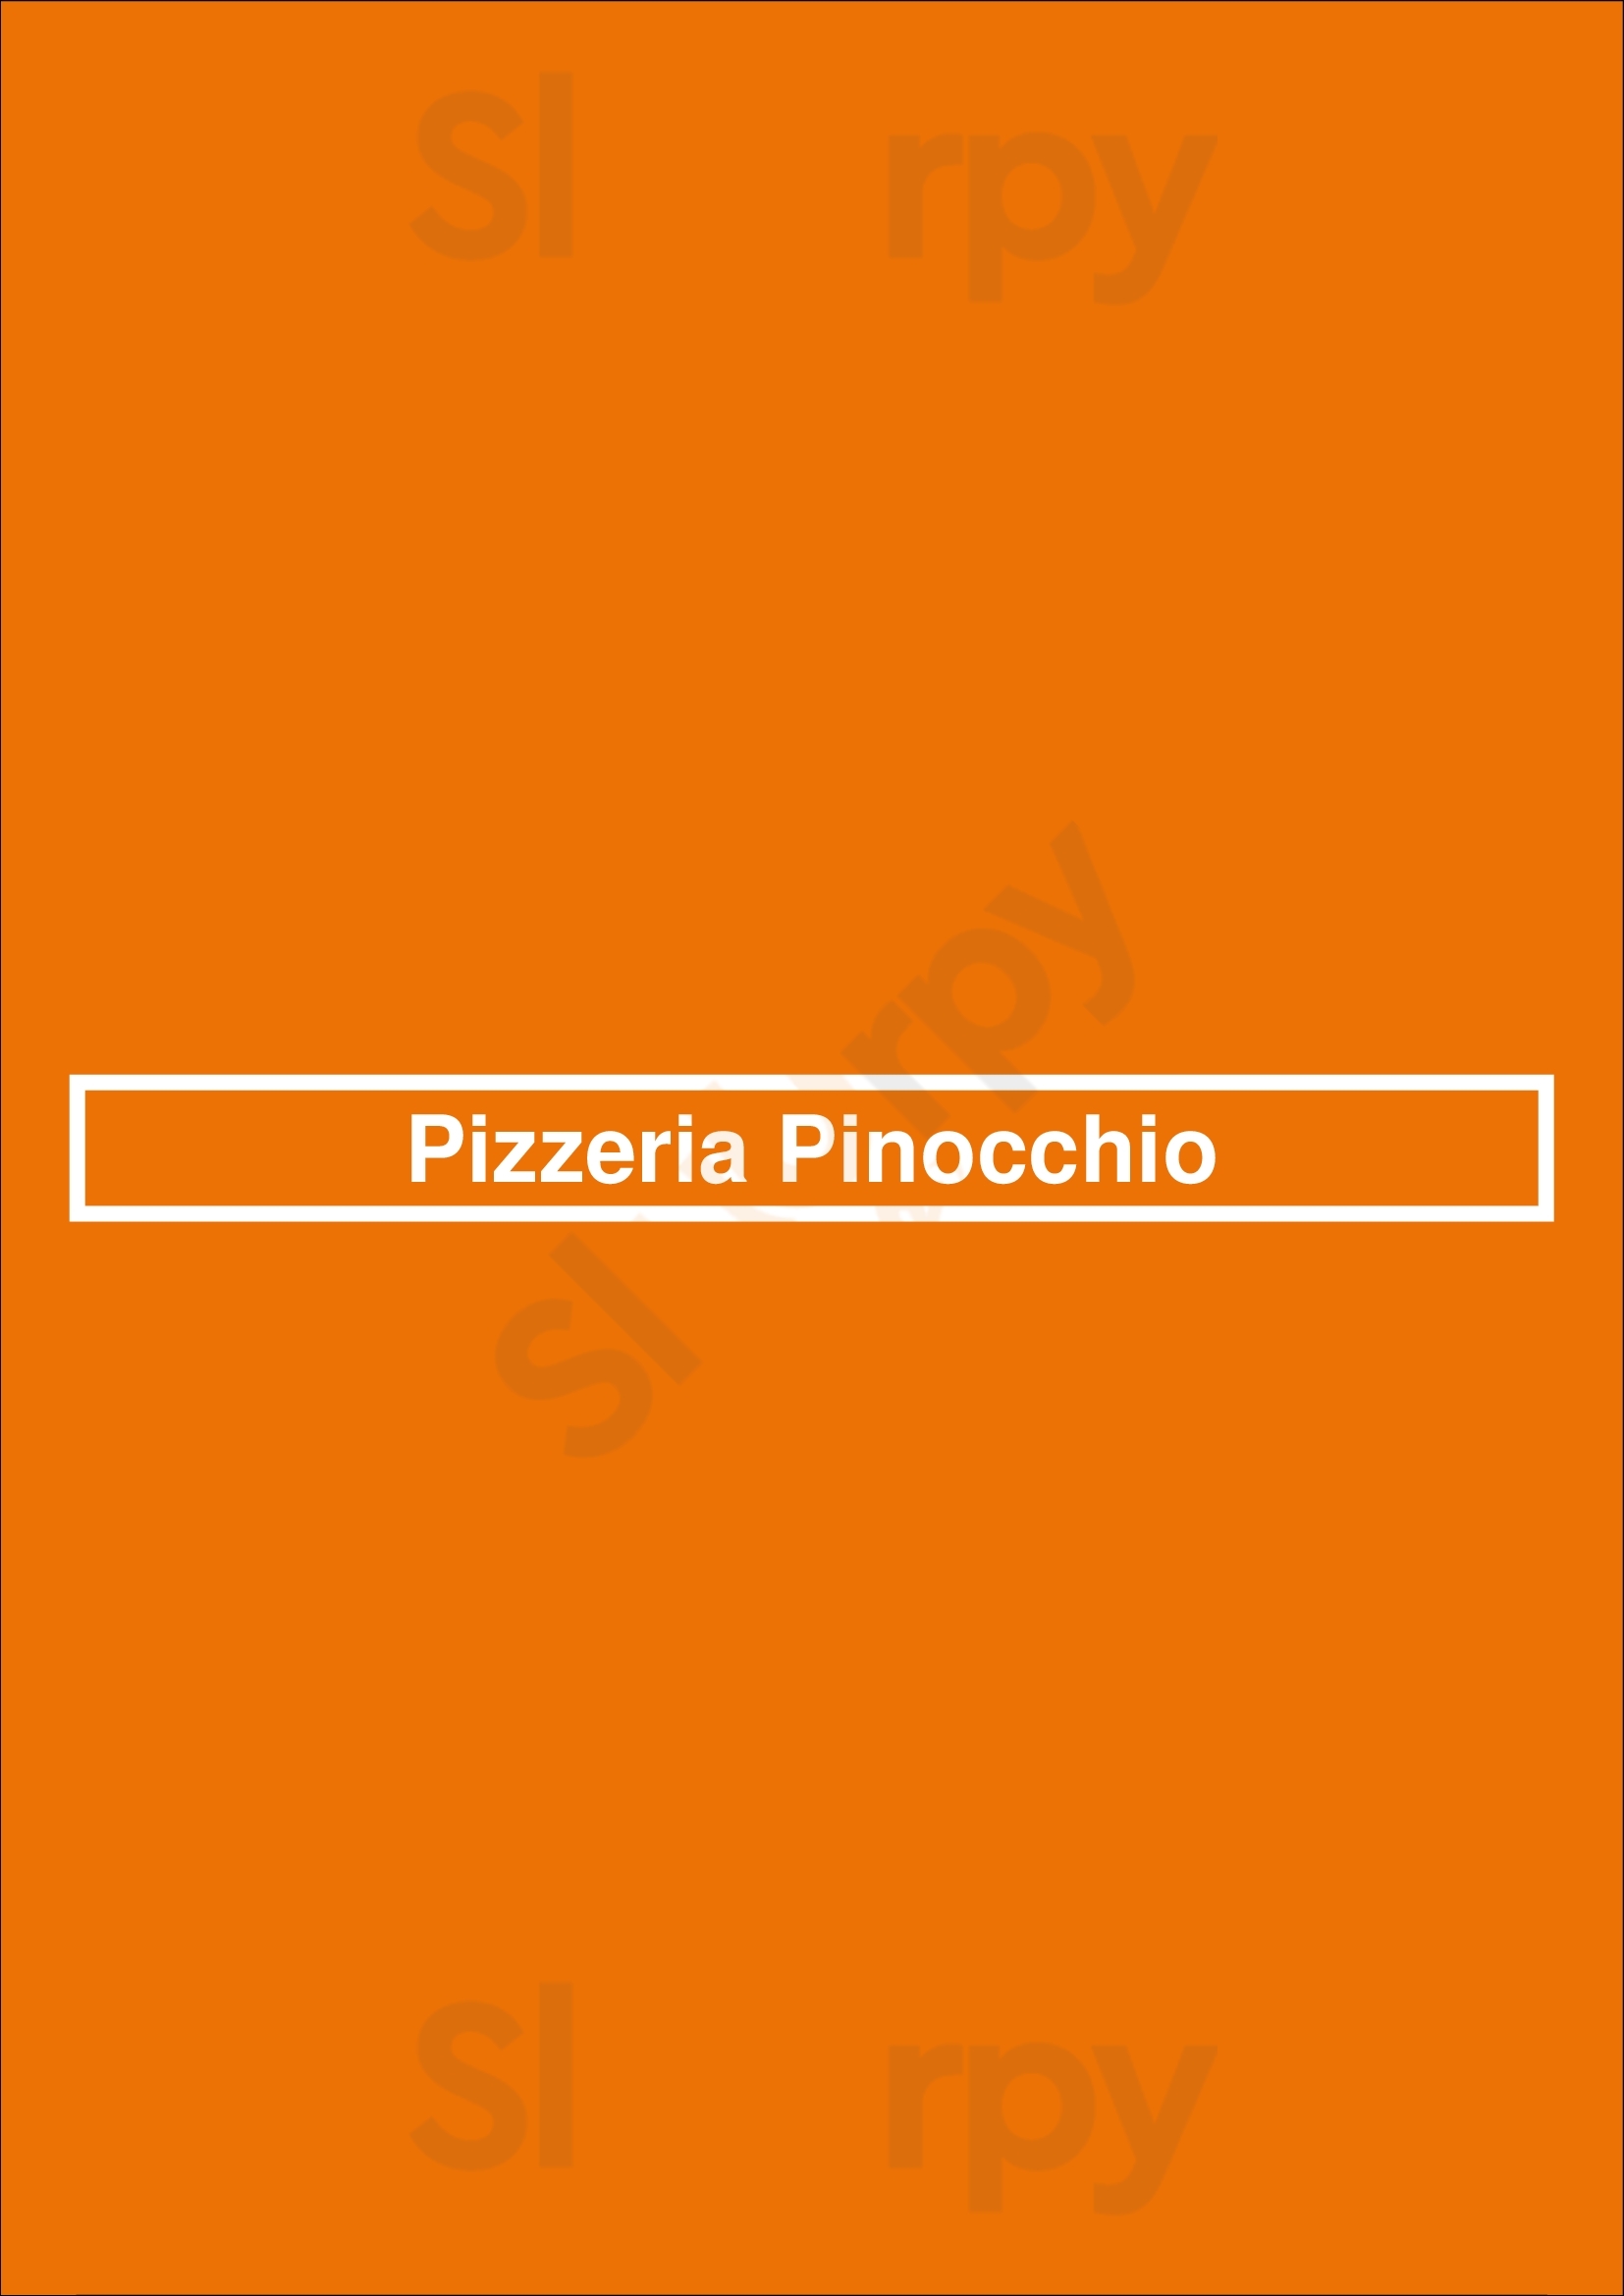 Pinocchio Restaurant Benidorm Menu - 1